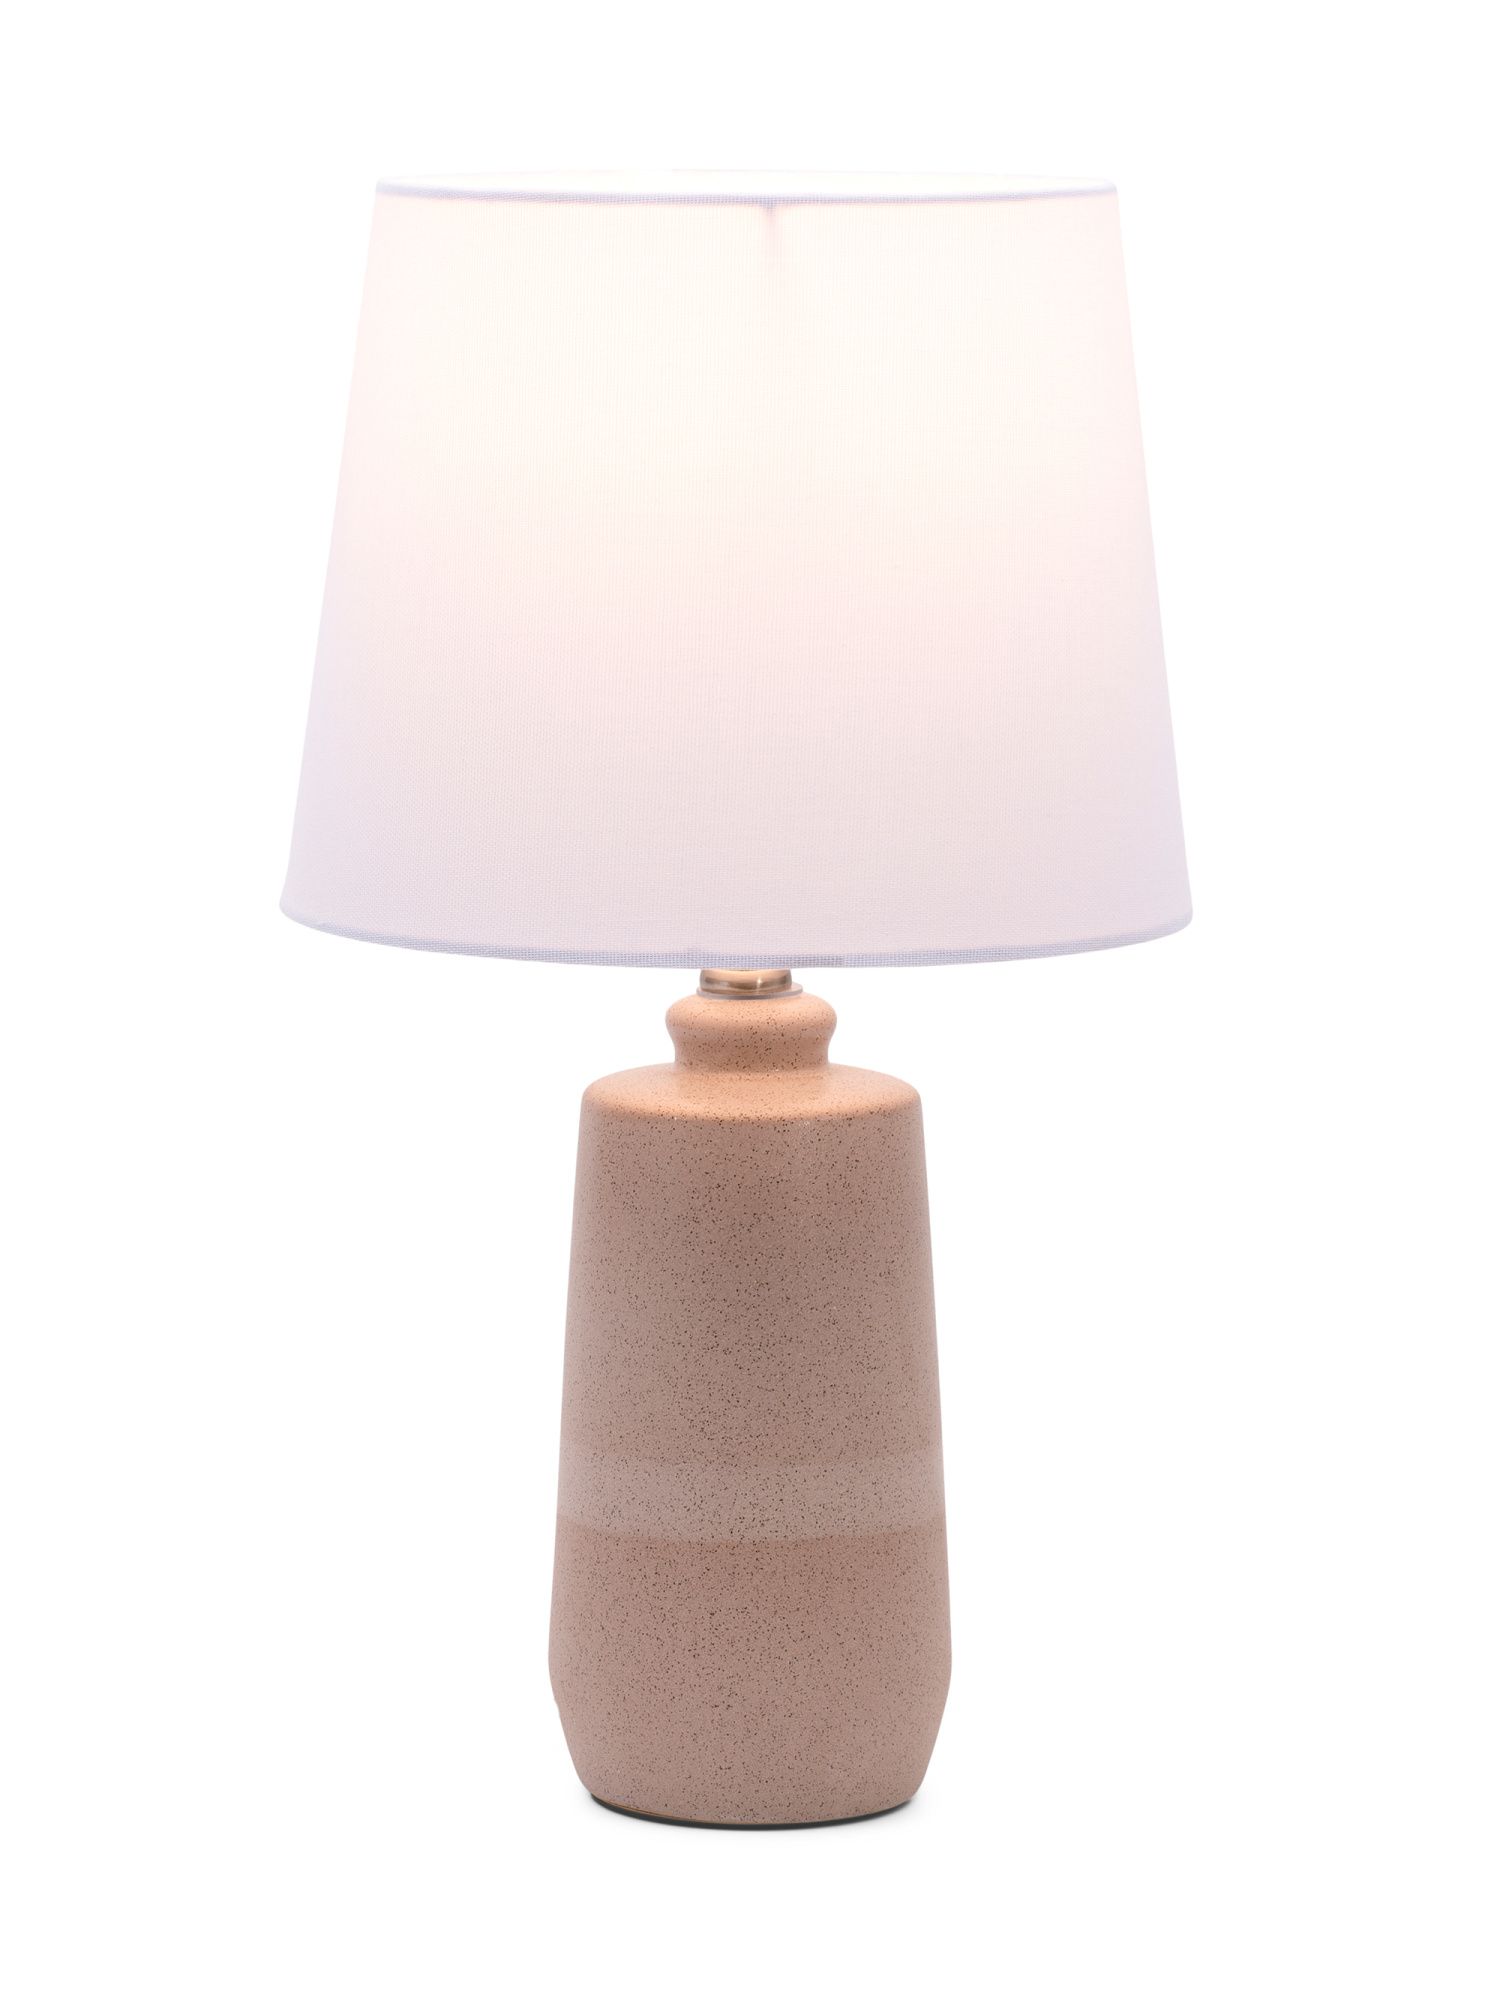 Sanded Ceramic Table Lamp | TJ Maxx